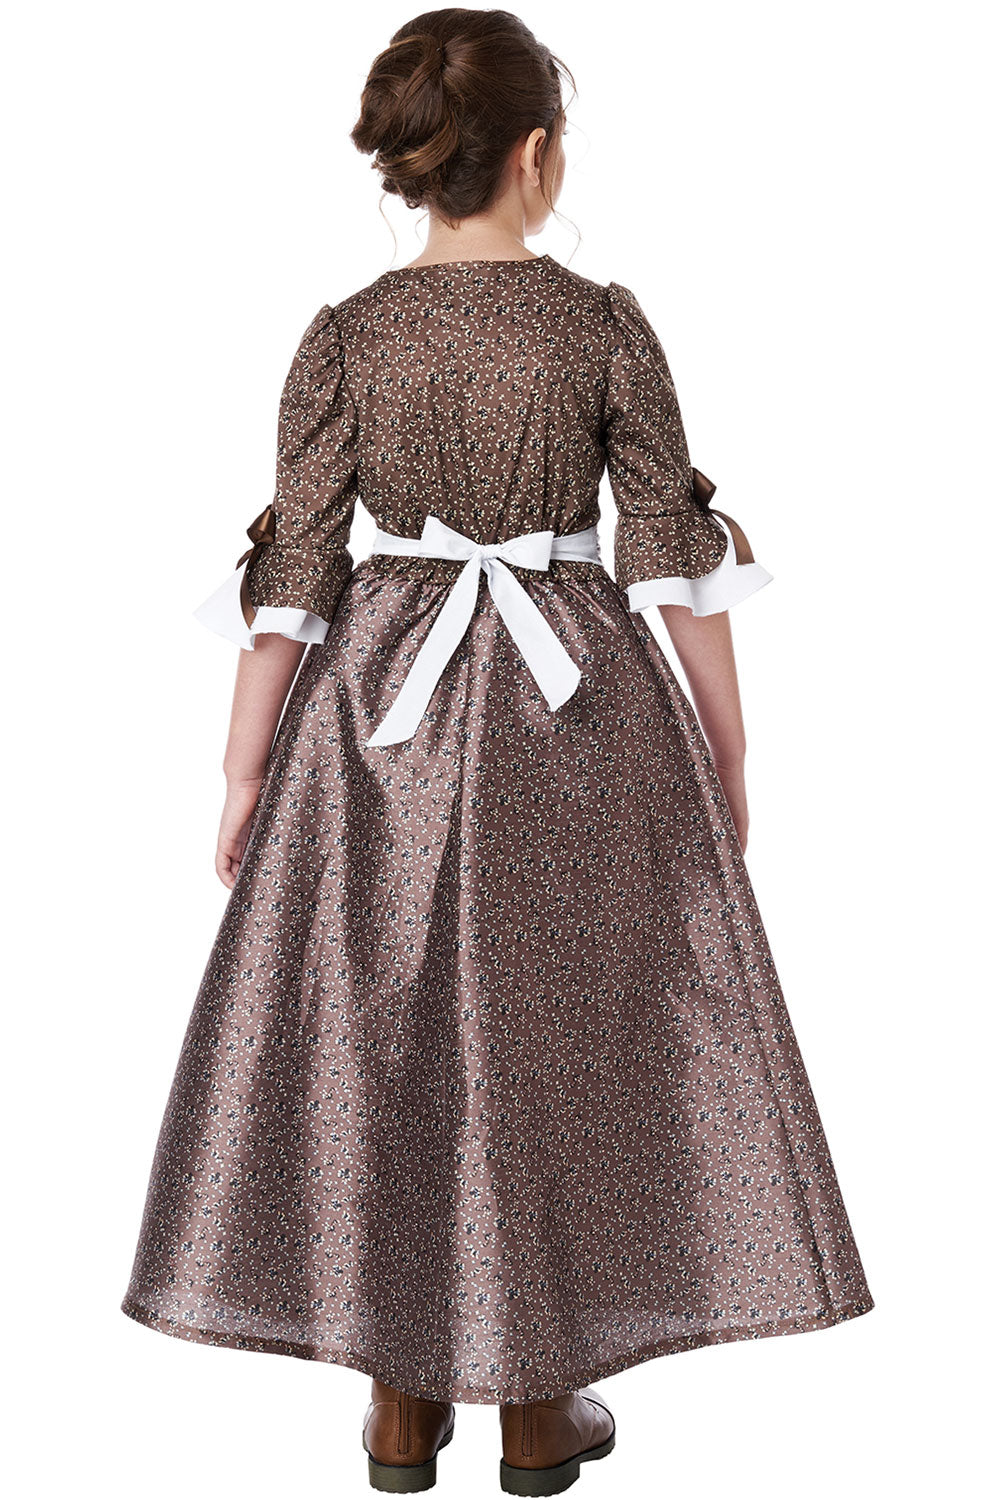 American Colonial Dress / Child California Costume 3021-125